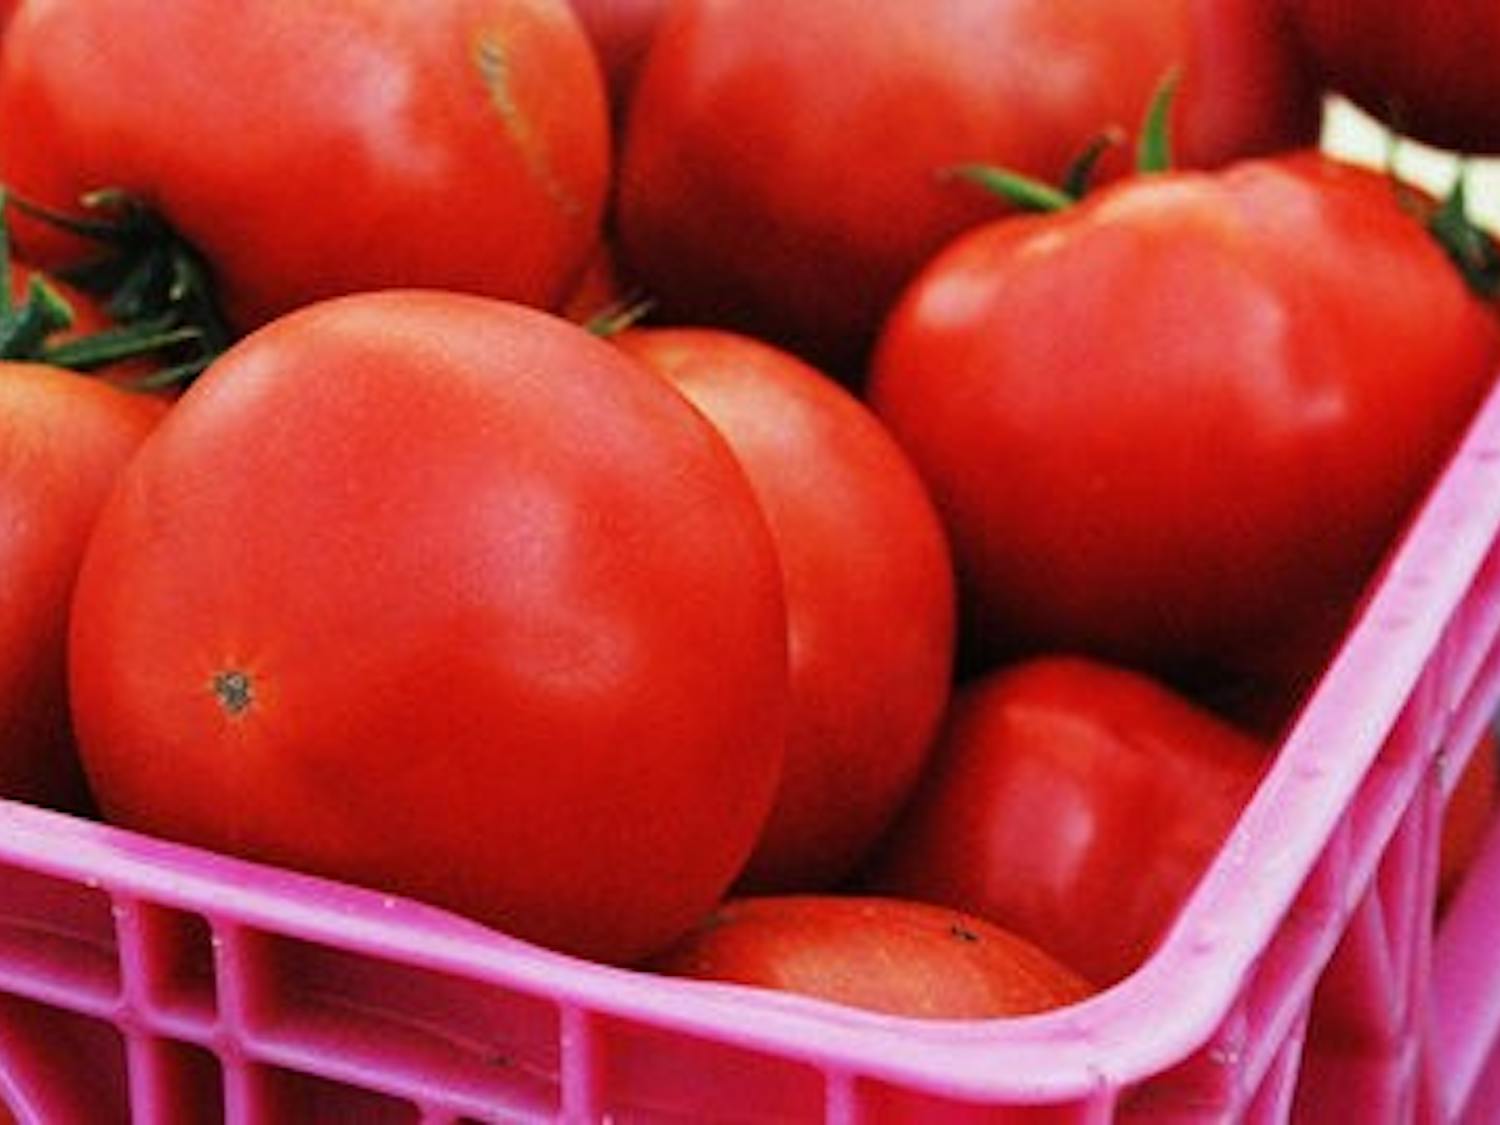 Harman's red tomatoes